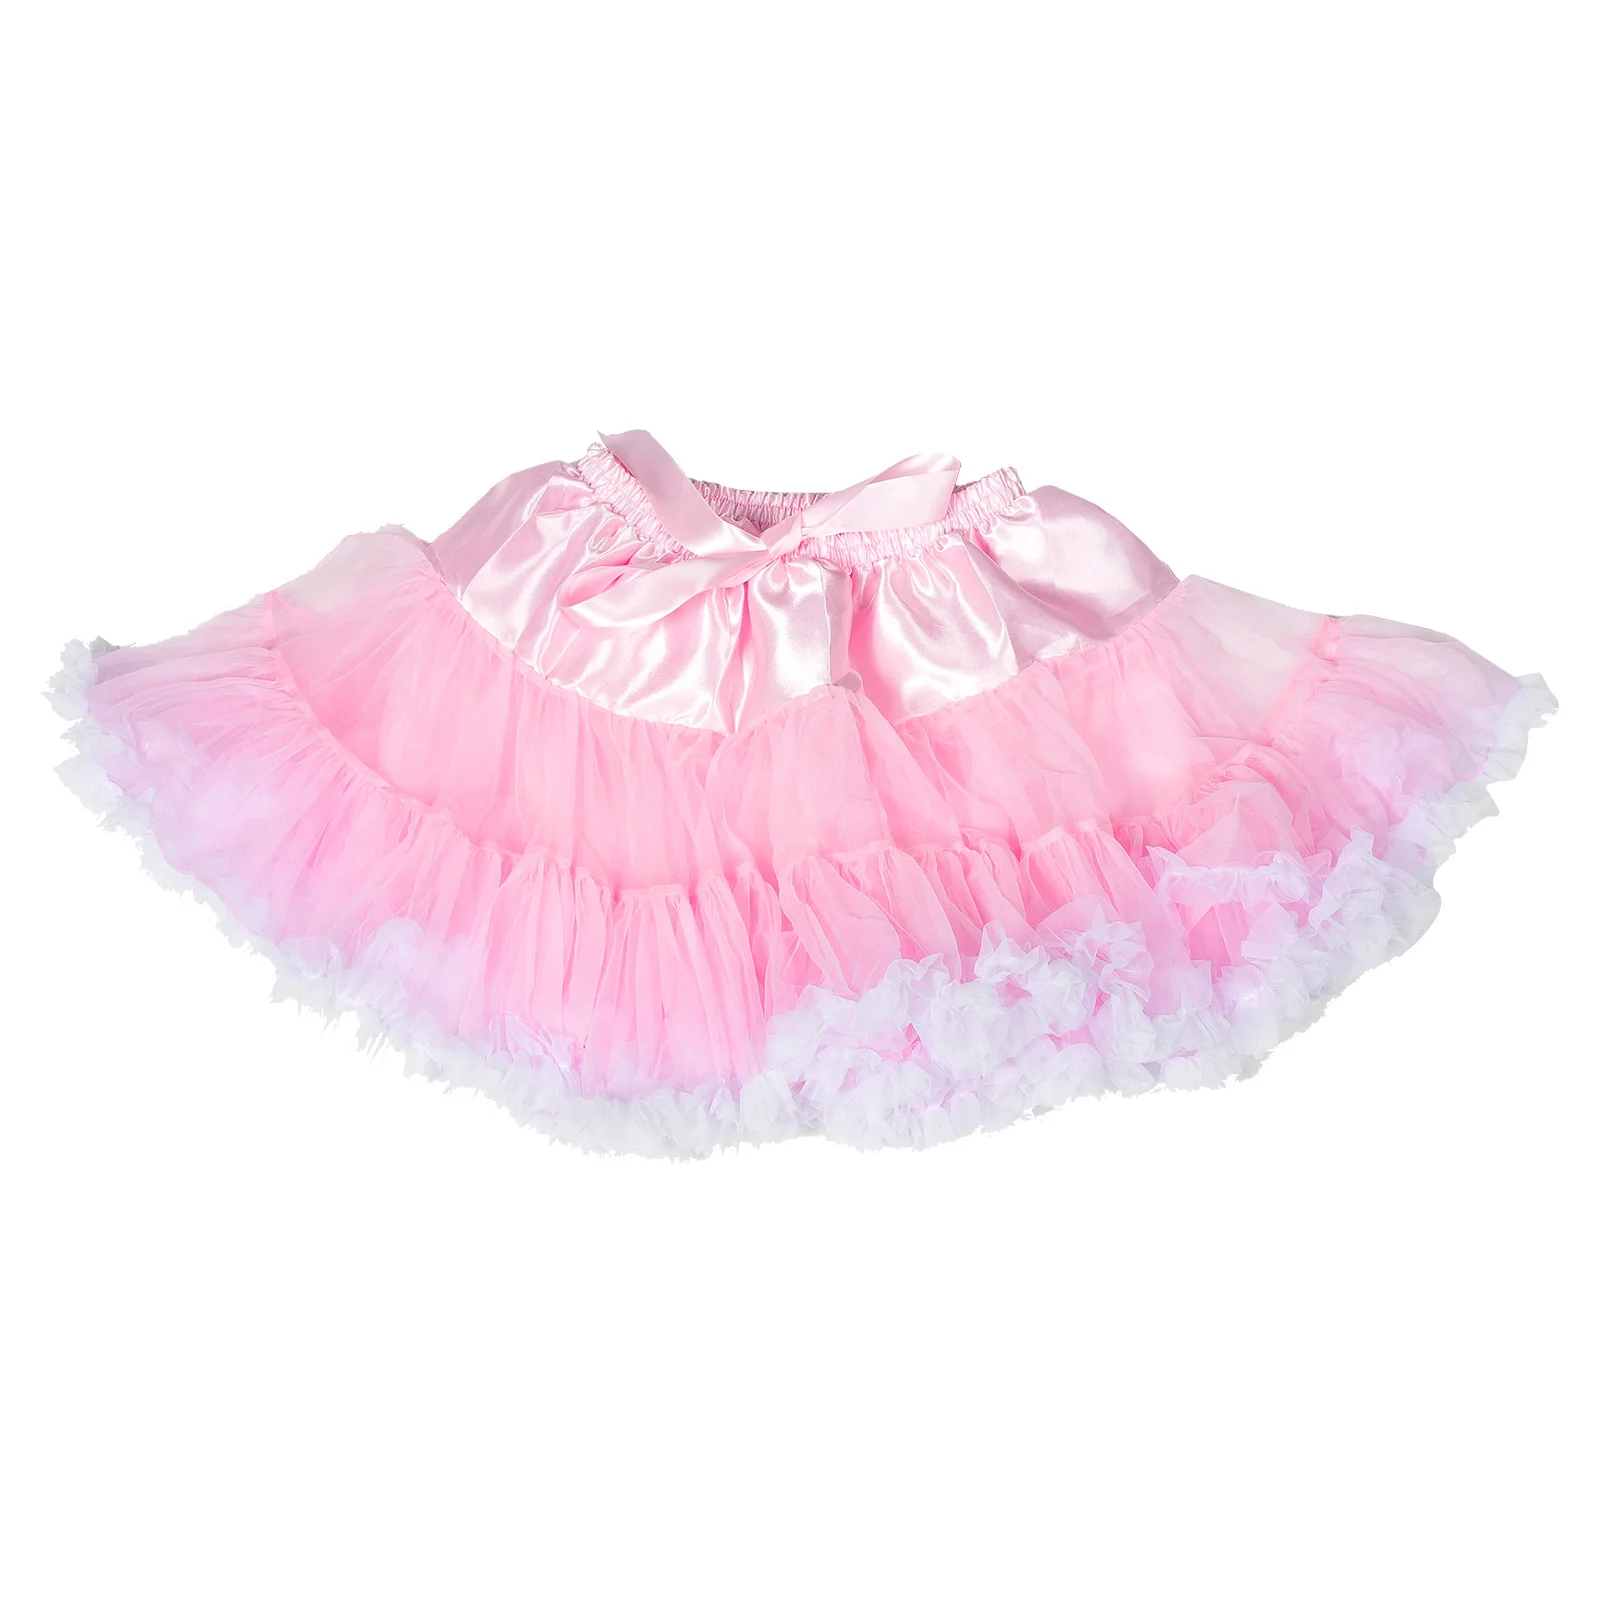 

Girls Tutu Skirt Decorative Dress Costume Party Festival Dress Photo Prop Ballet Dressing Up Skirt